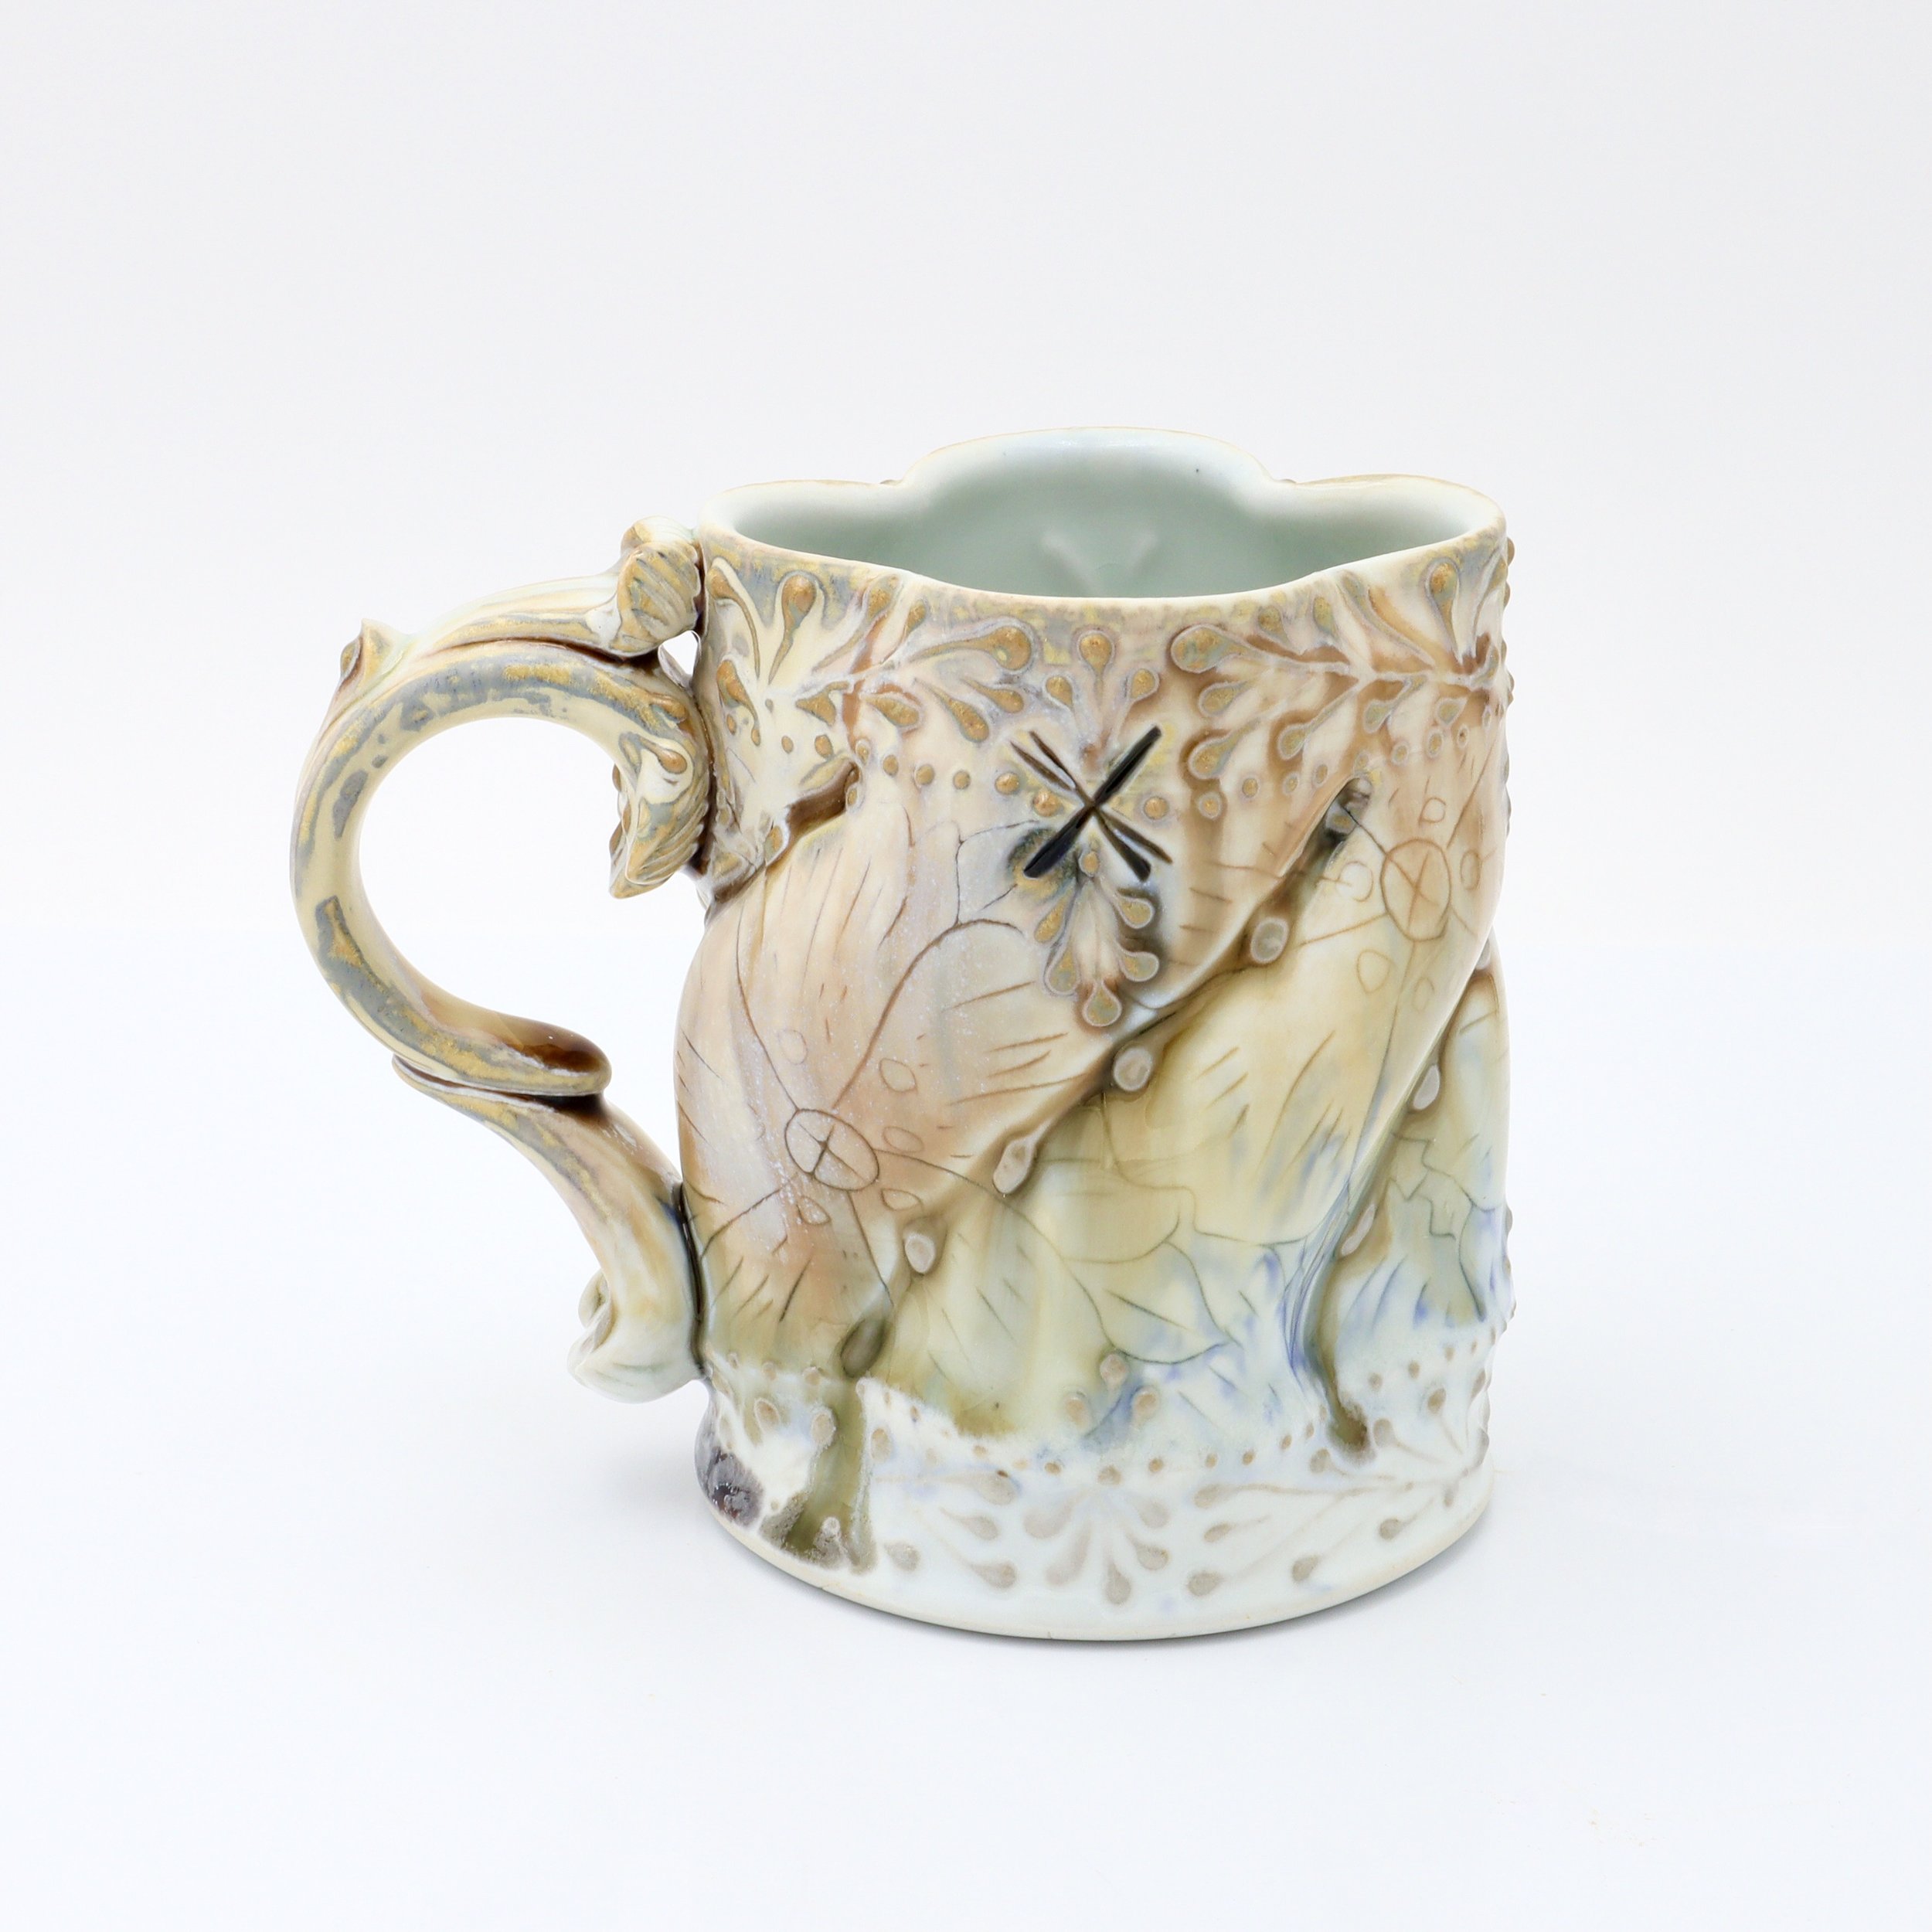  Ceramic mug by Mike Stumbras